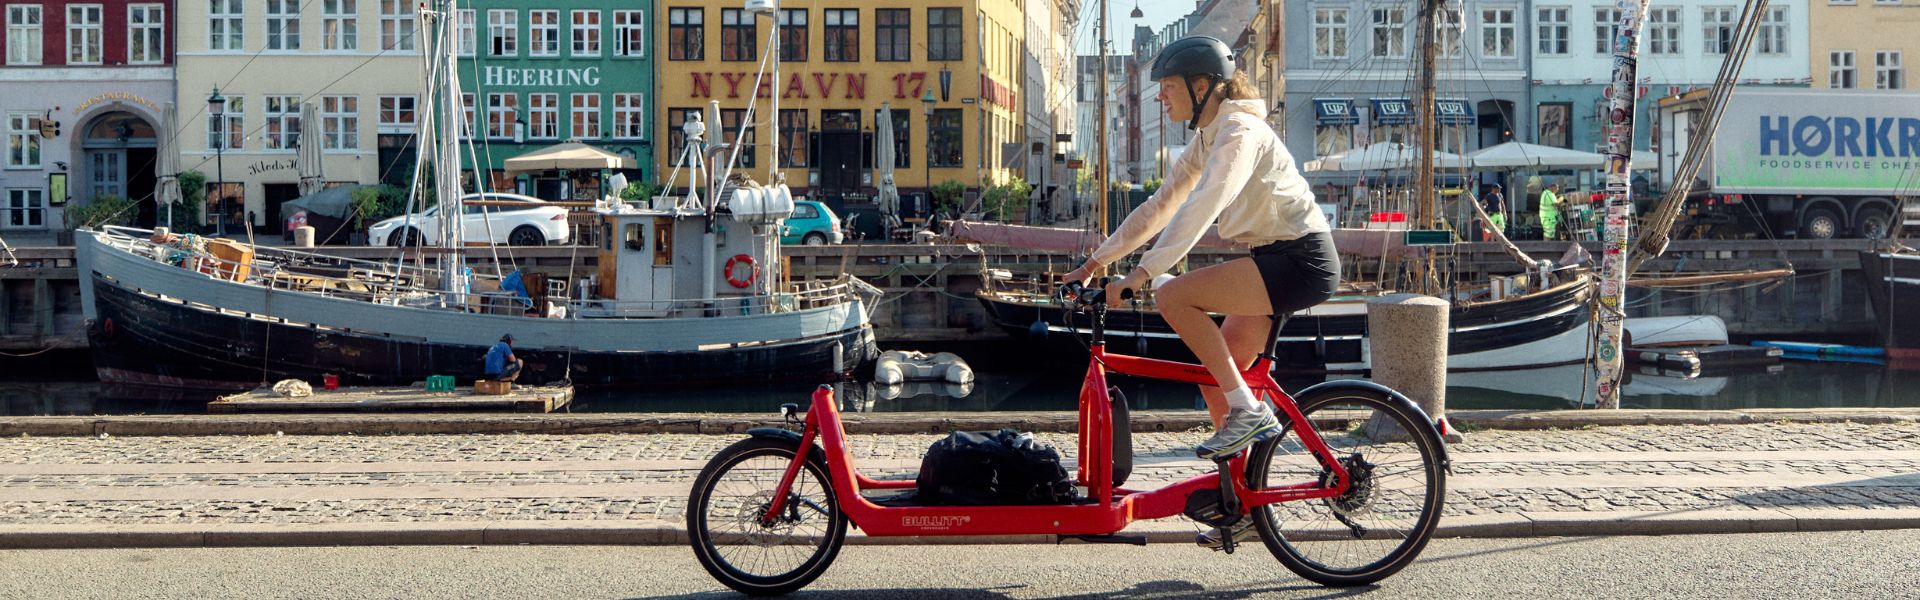 Copenhagen - Cycling in the city